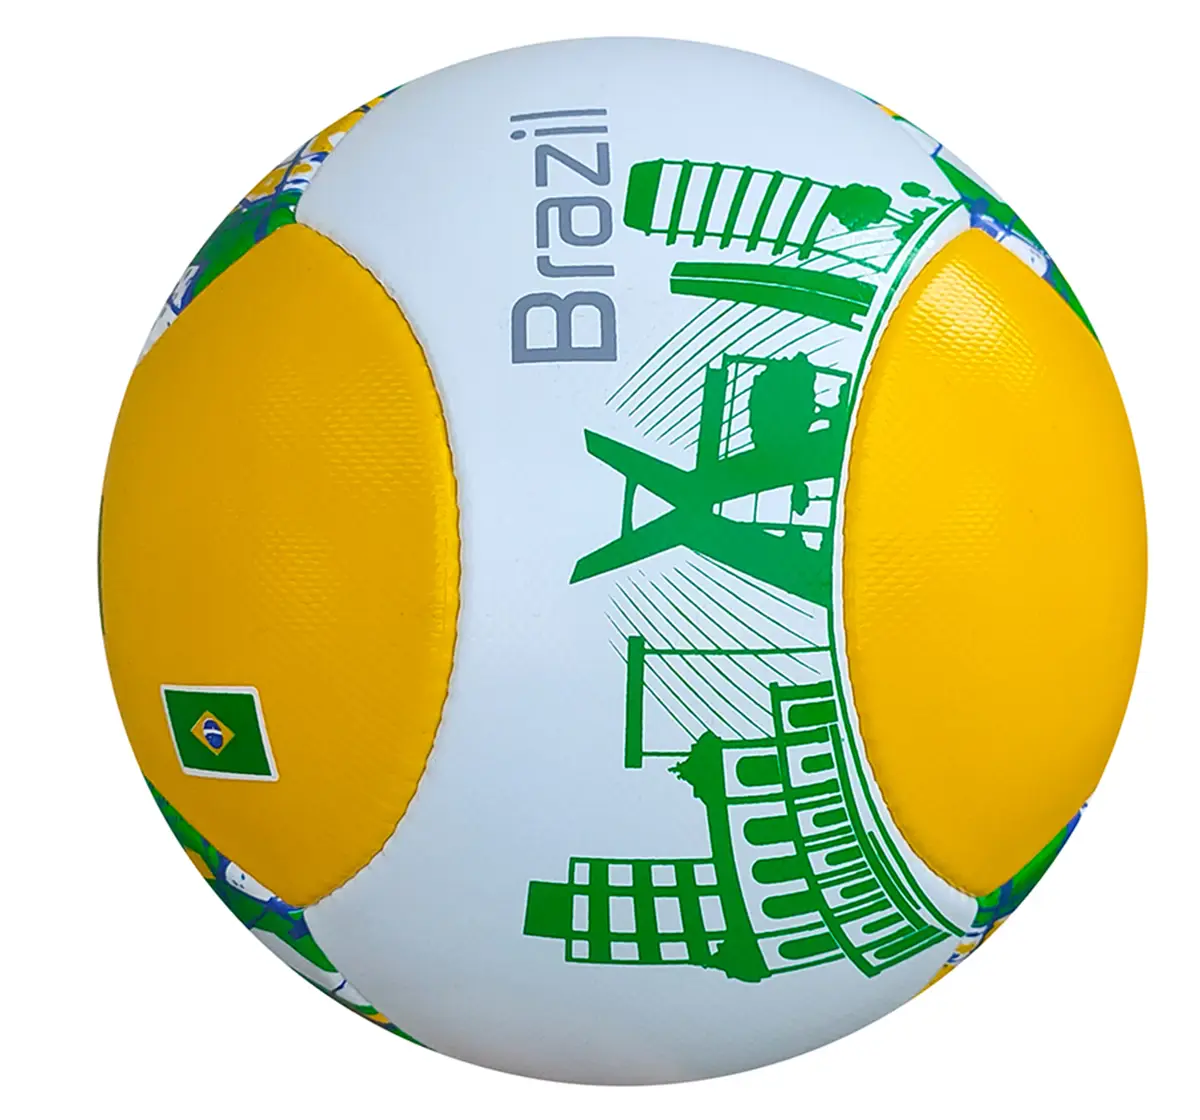 Starter Football Size 5 Brazil Multicolor 8Y+